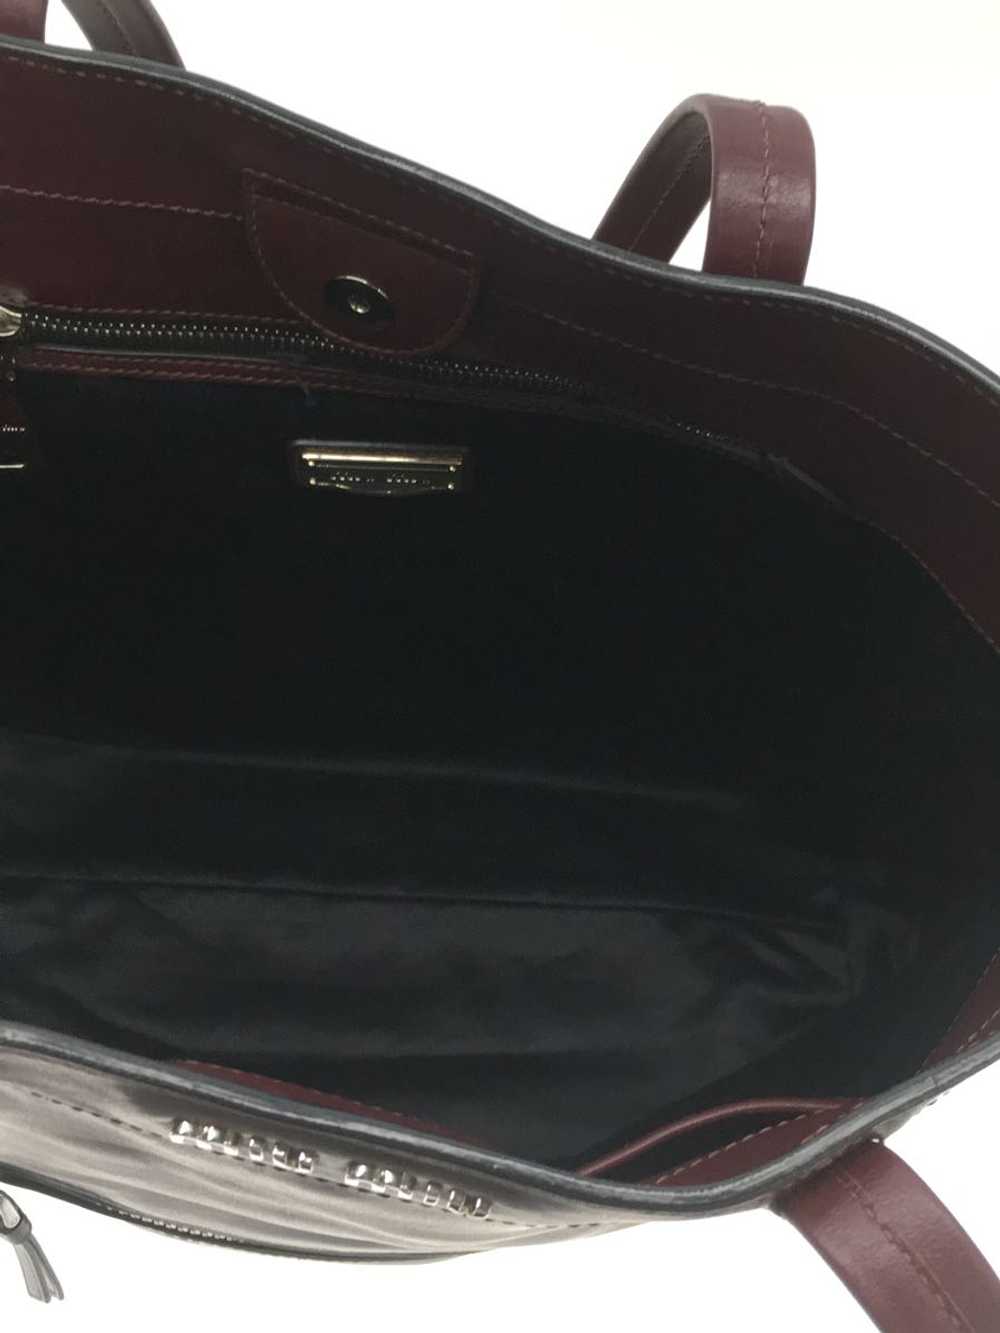 MIUMIU Tote Bag/Leather/Red Bag - image 6